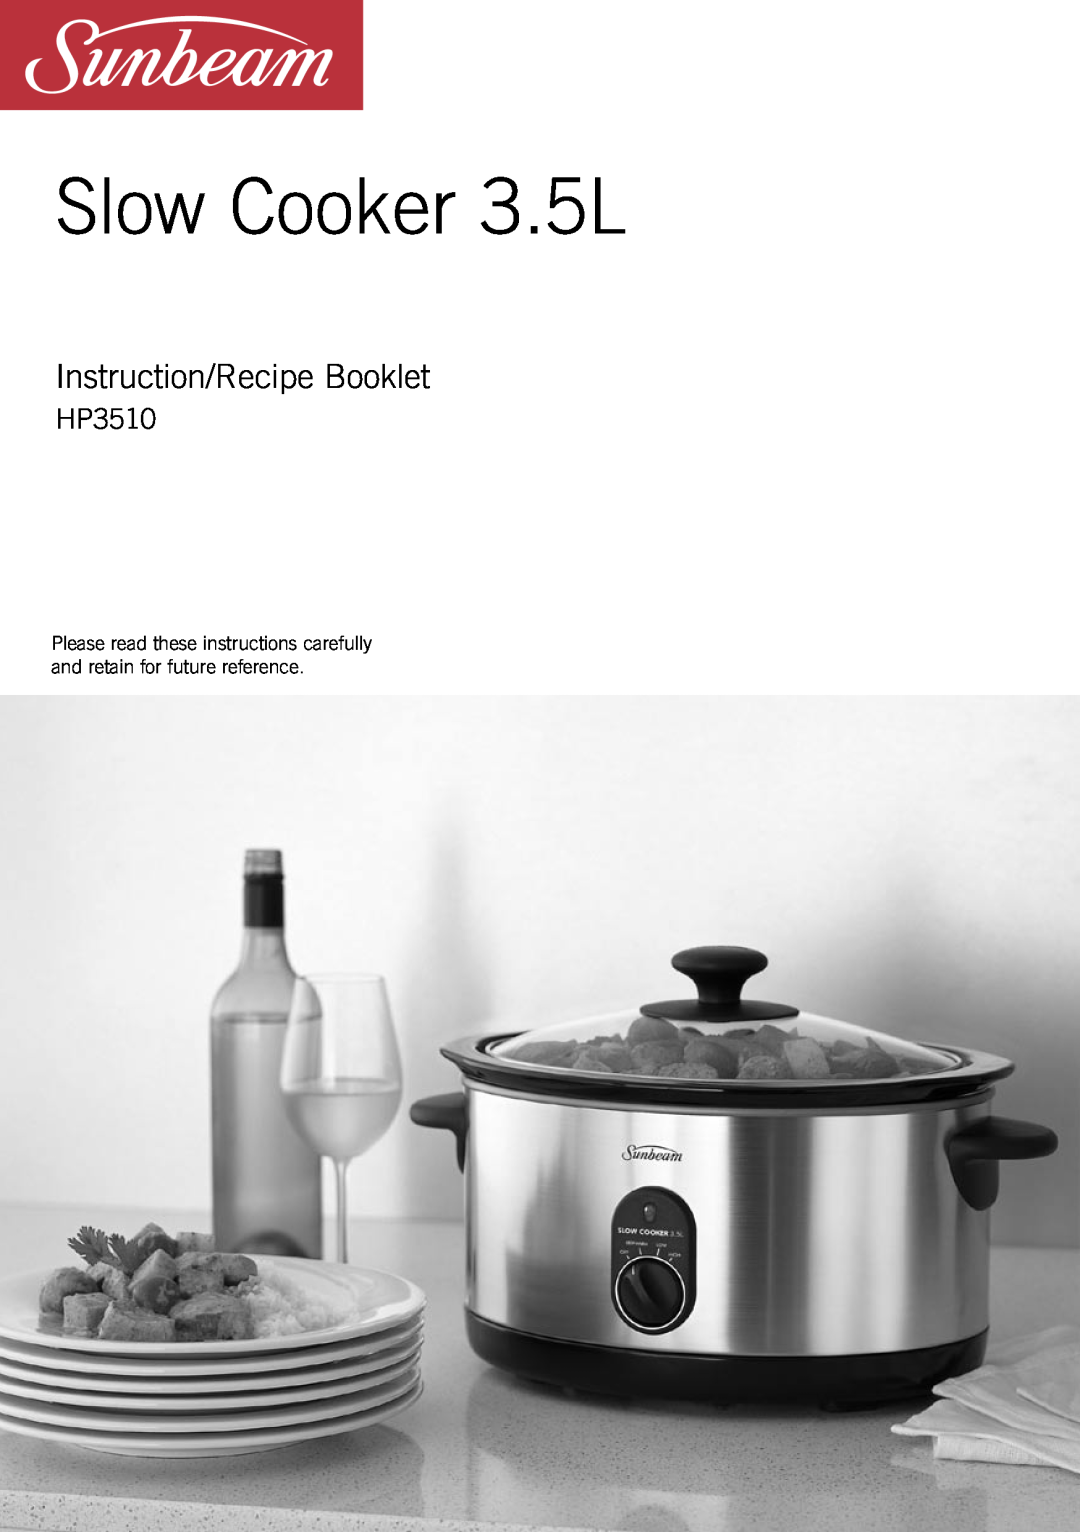 Sunbeam HP3510 manual Slow Cooker 3.5L, Instruction/Recipe Booklet 